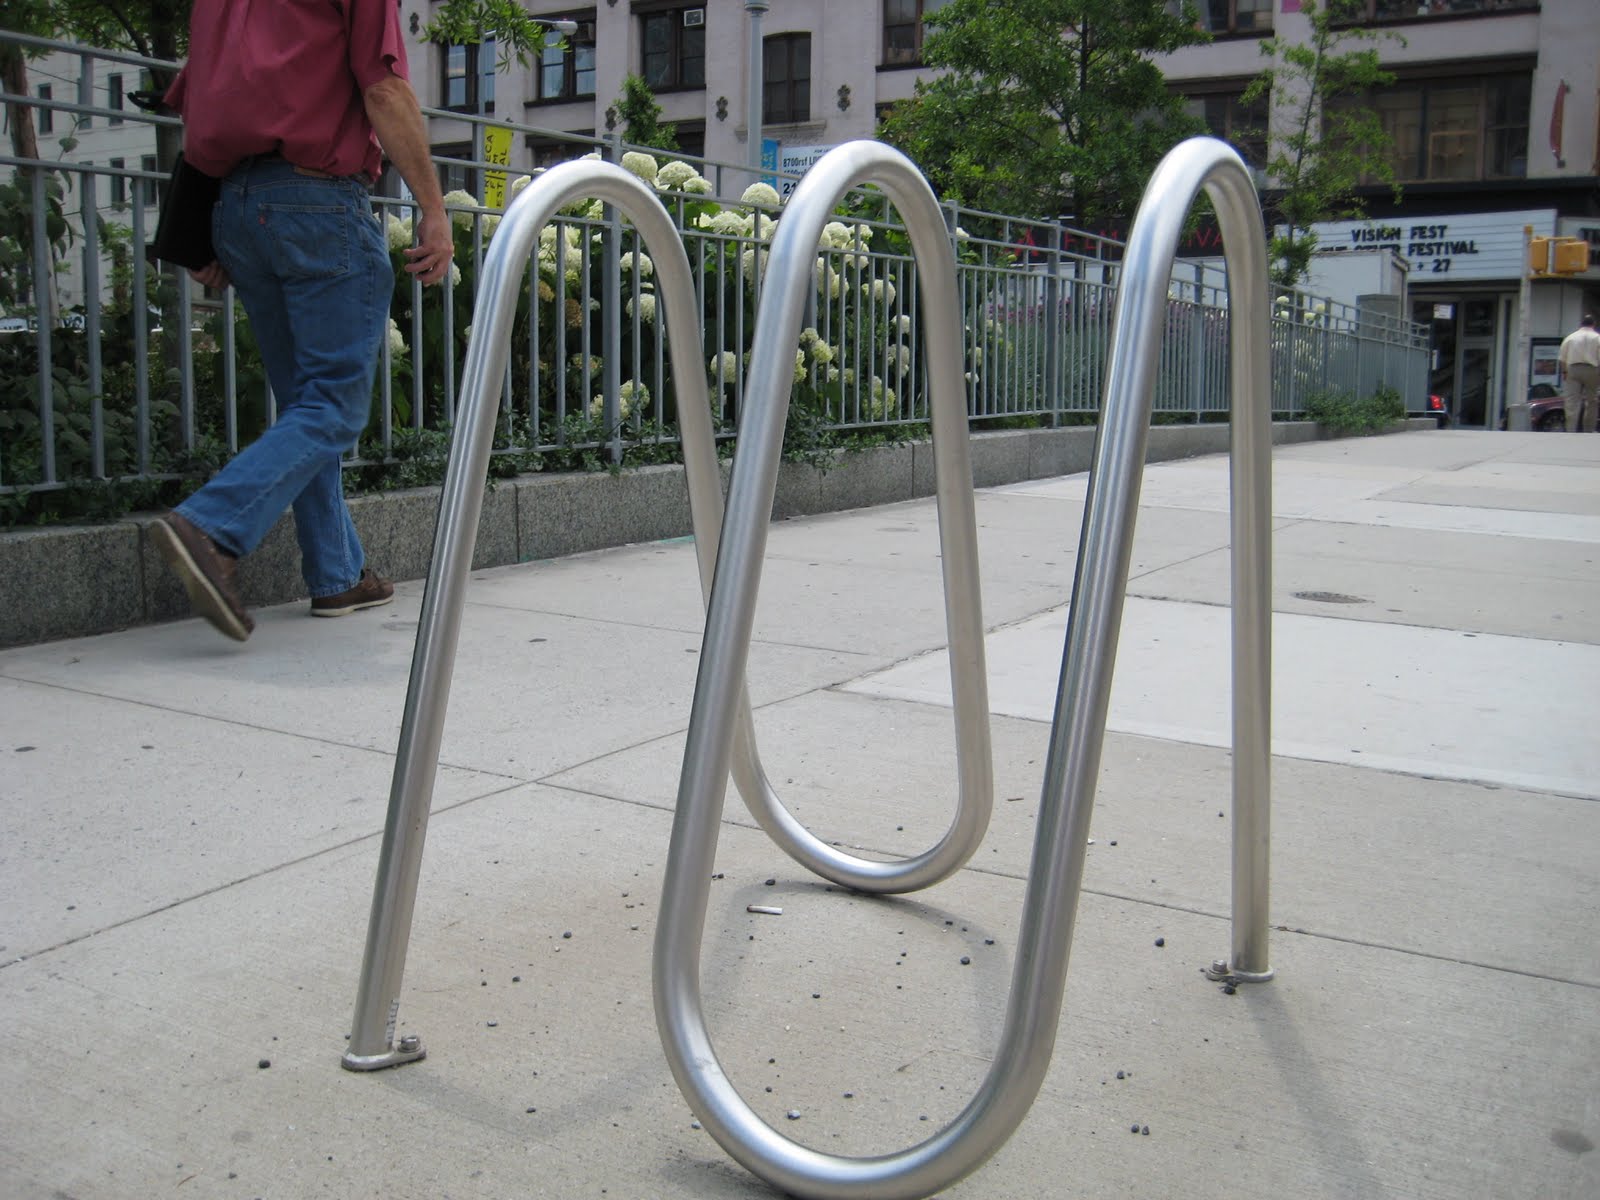 bike rack clip art - photo #41